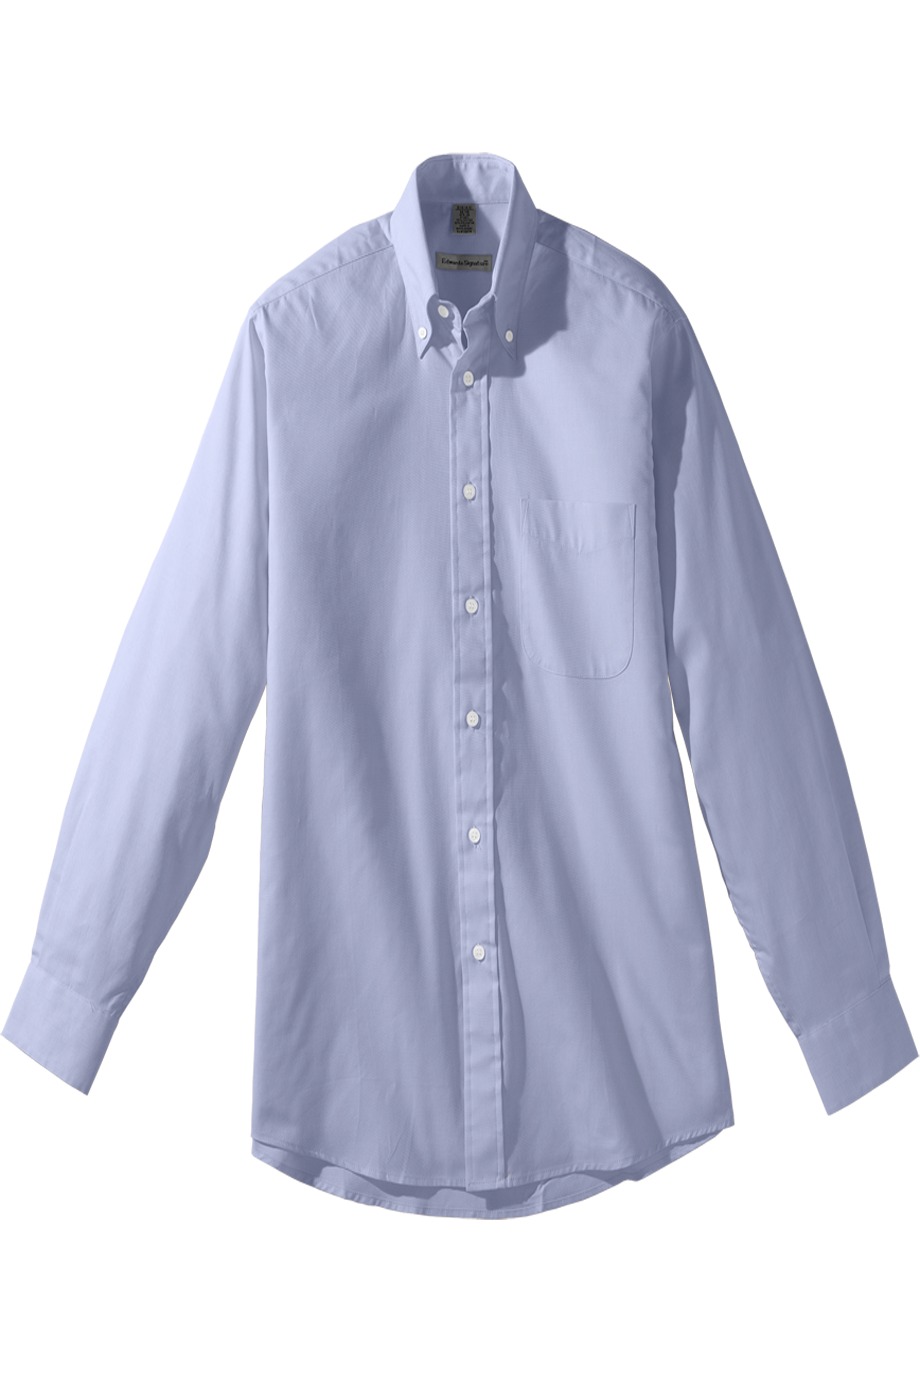 Edwards Garment 1975 - Men's Long Sleeve Pinpoint Oxford Shirt